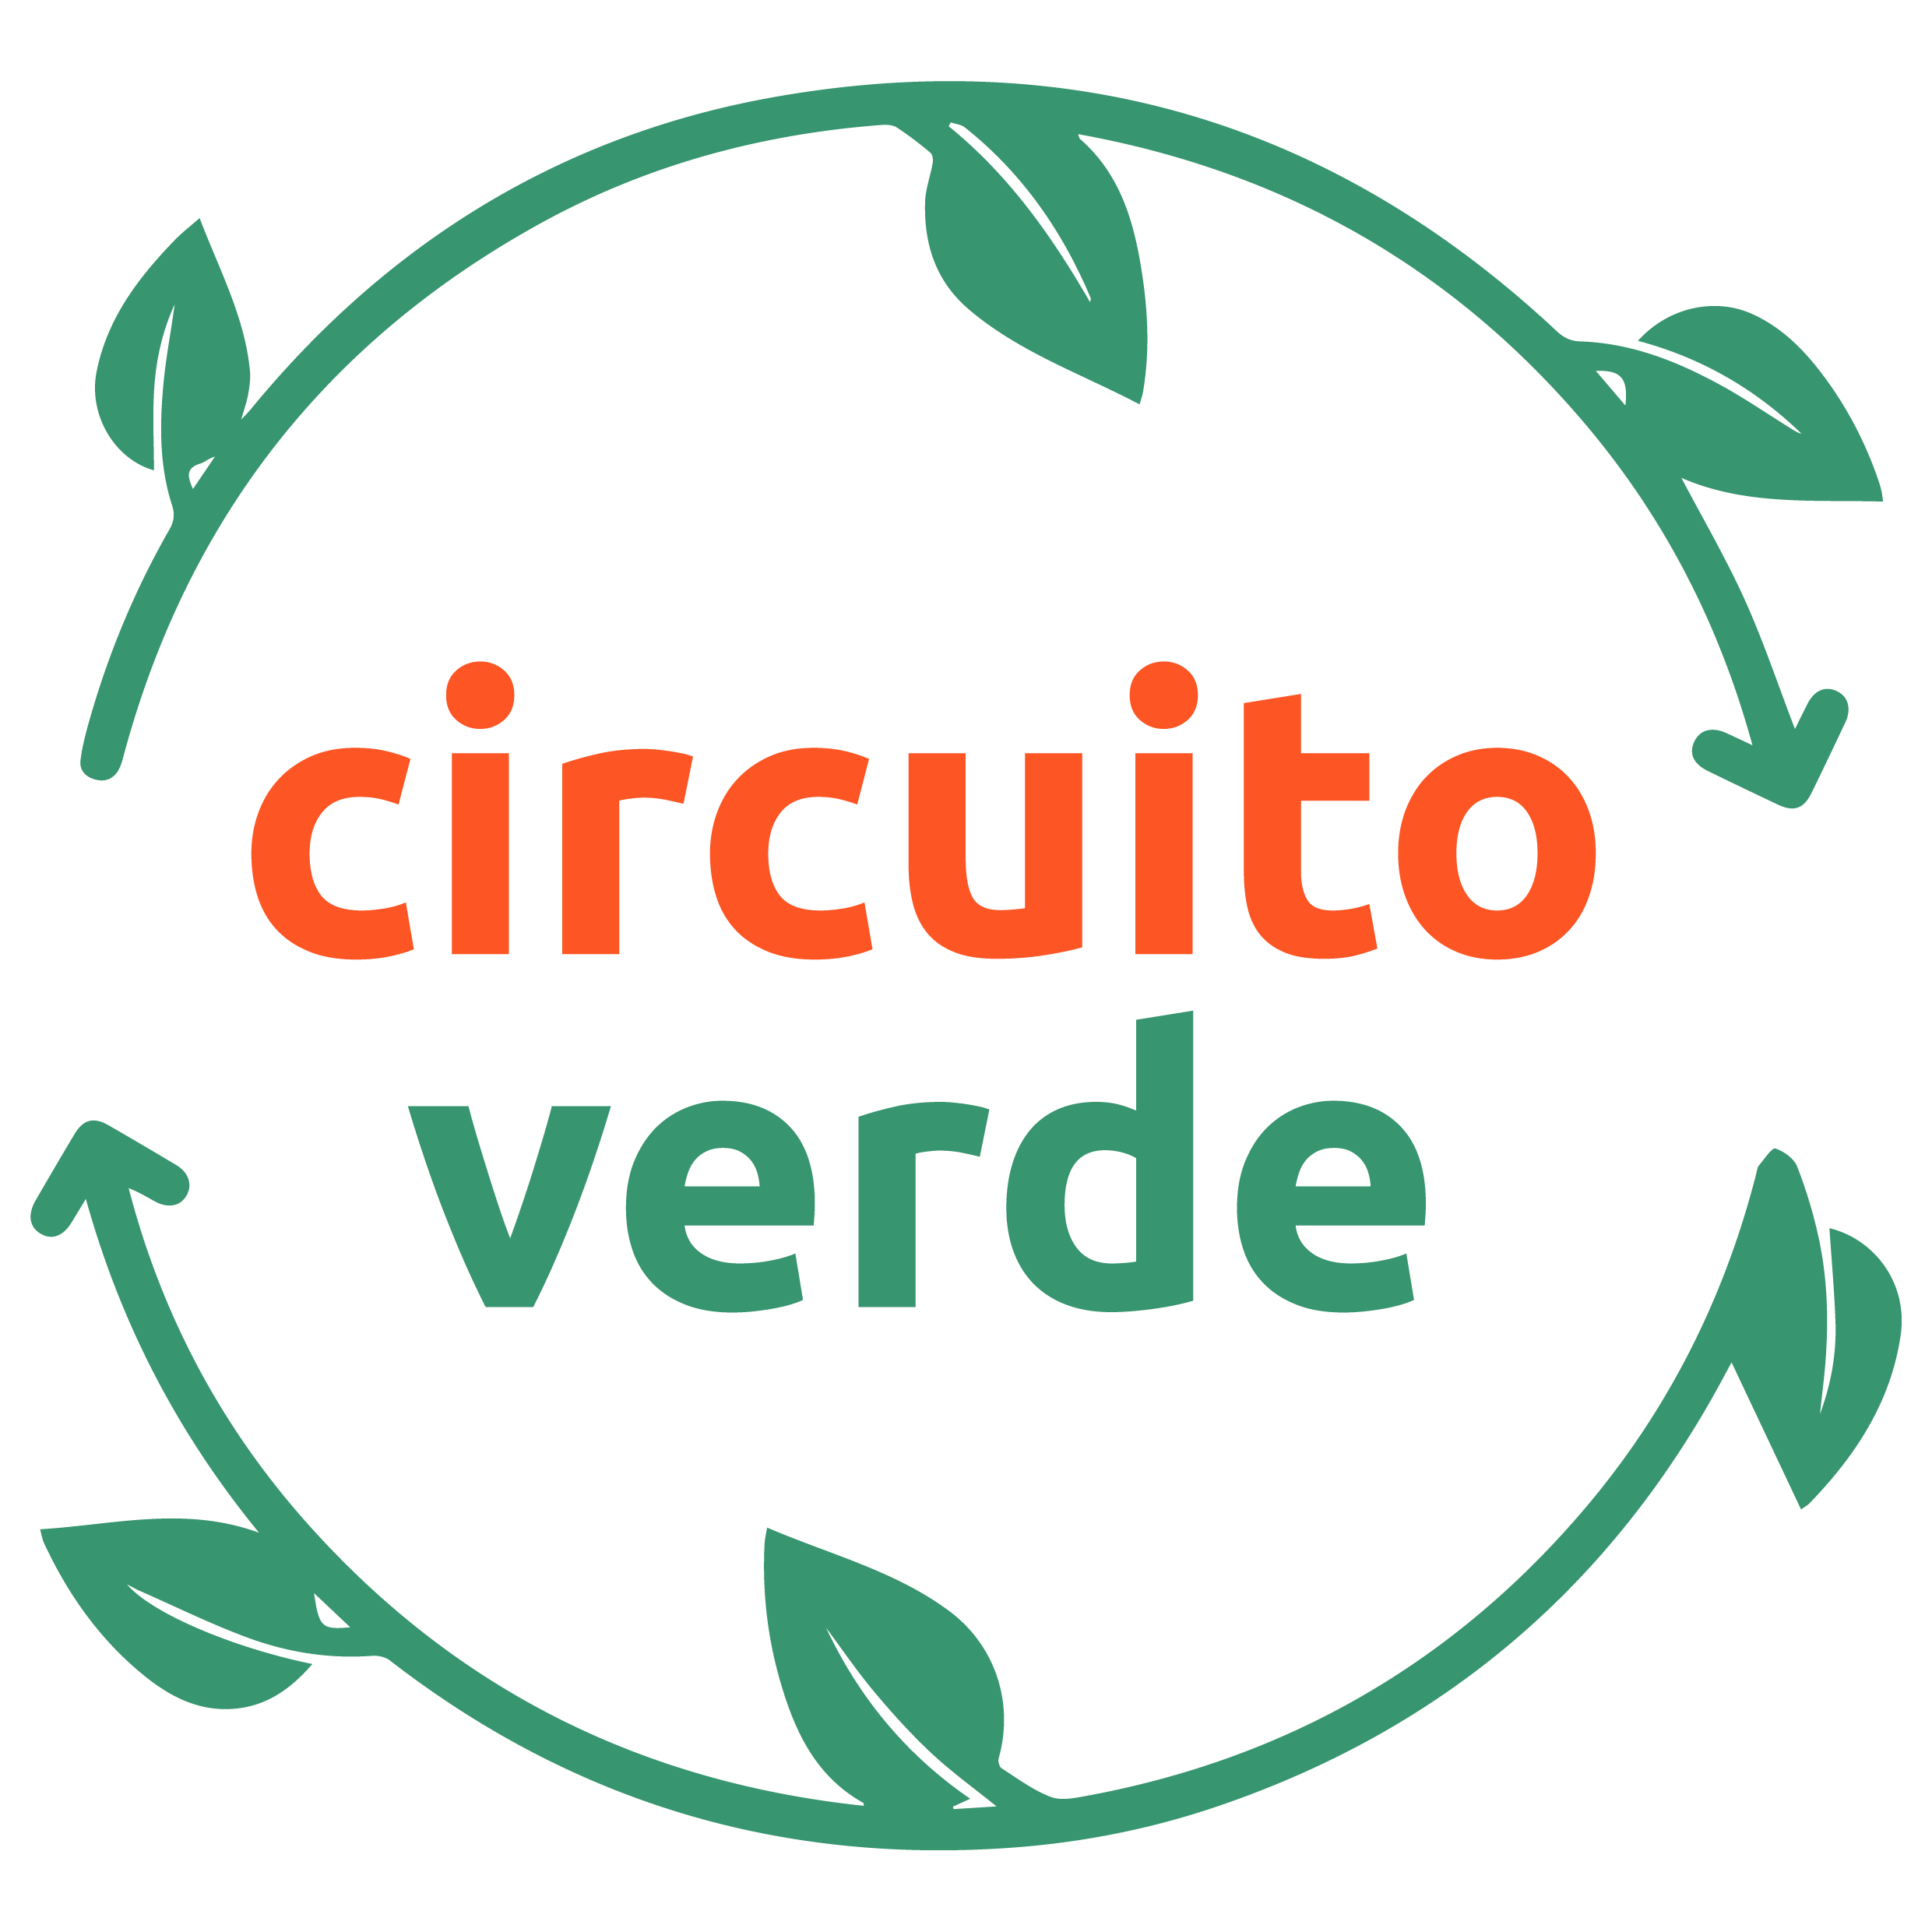 BBP collaborates with Circuito Verde